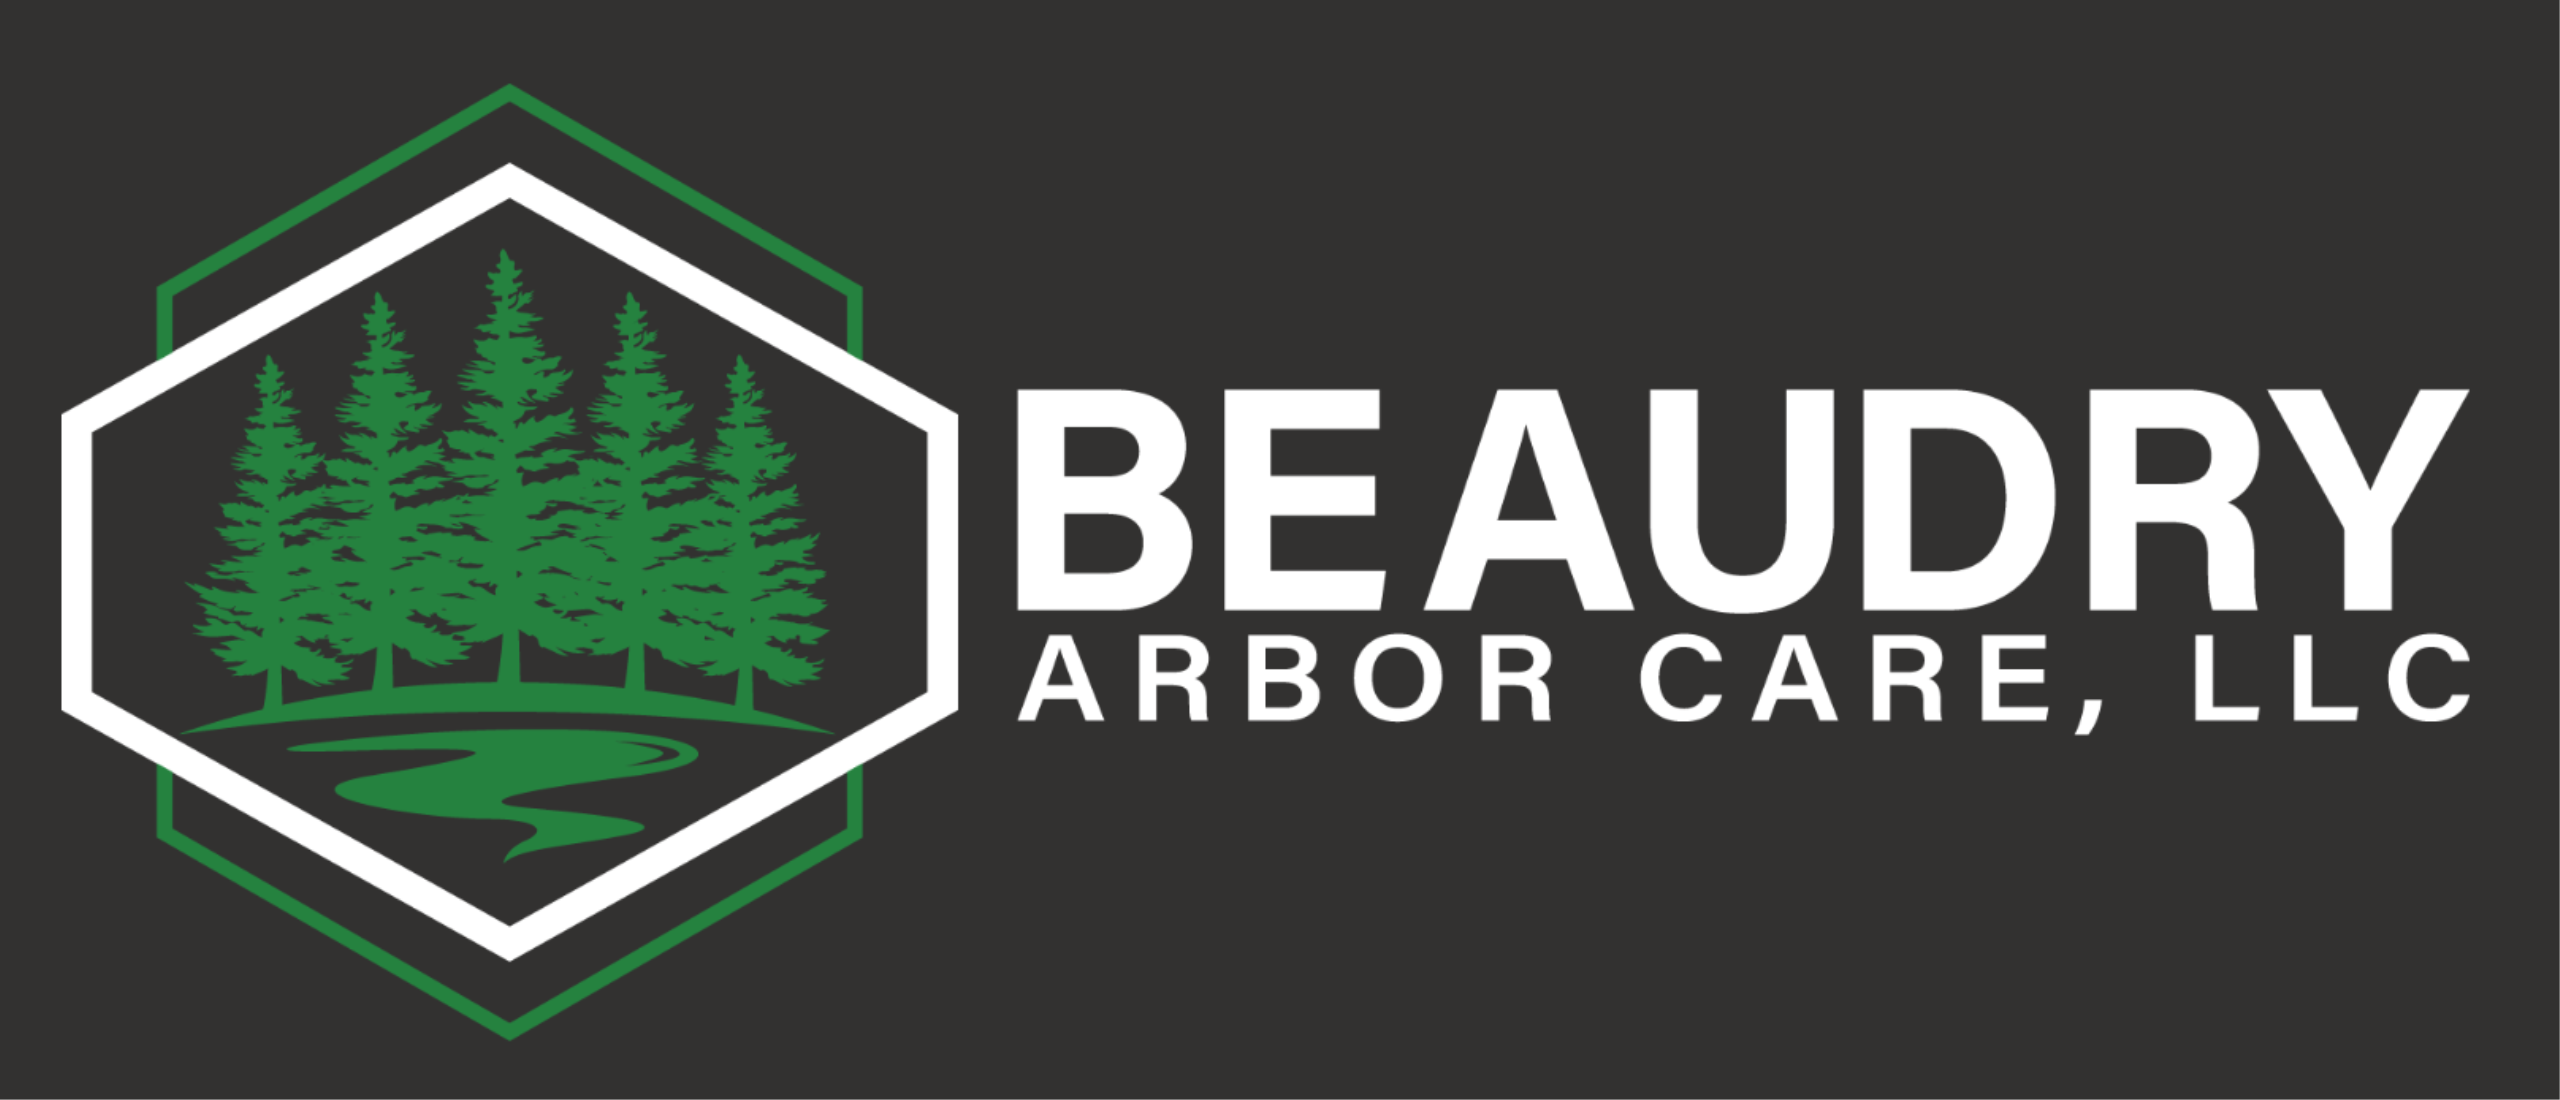 Beaudry Arbor Care, LLC Logo